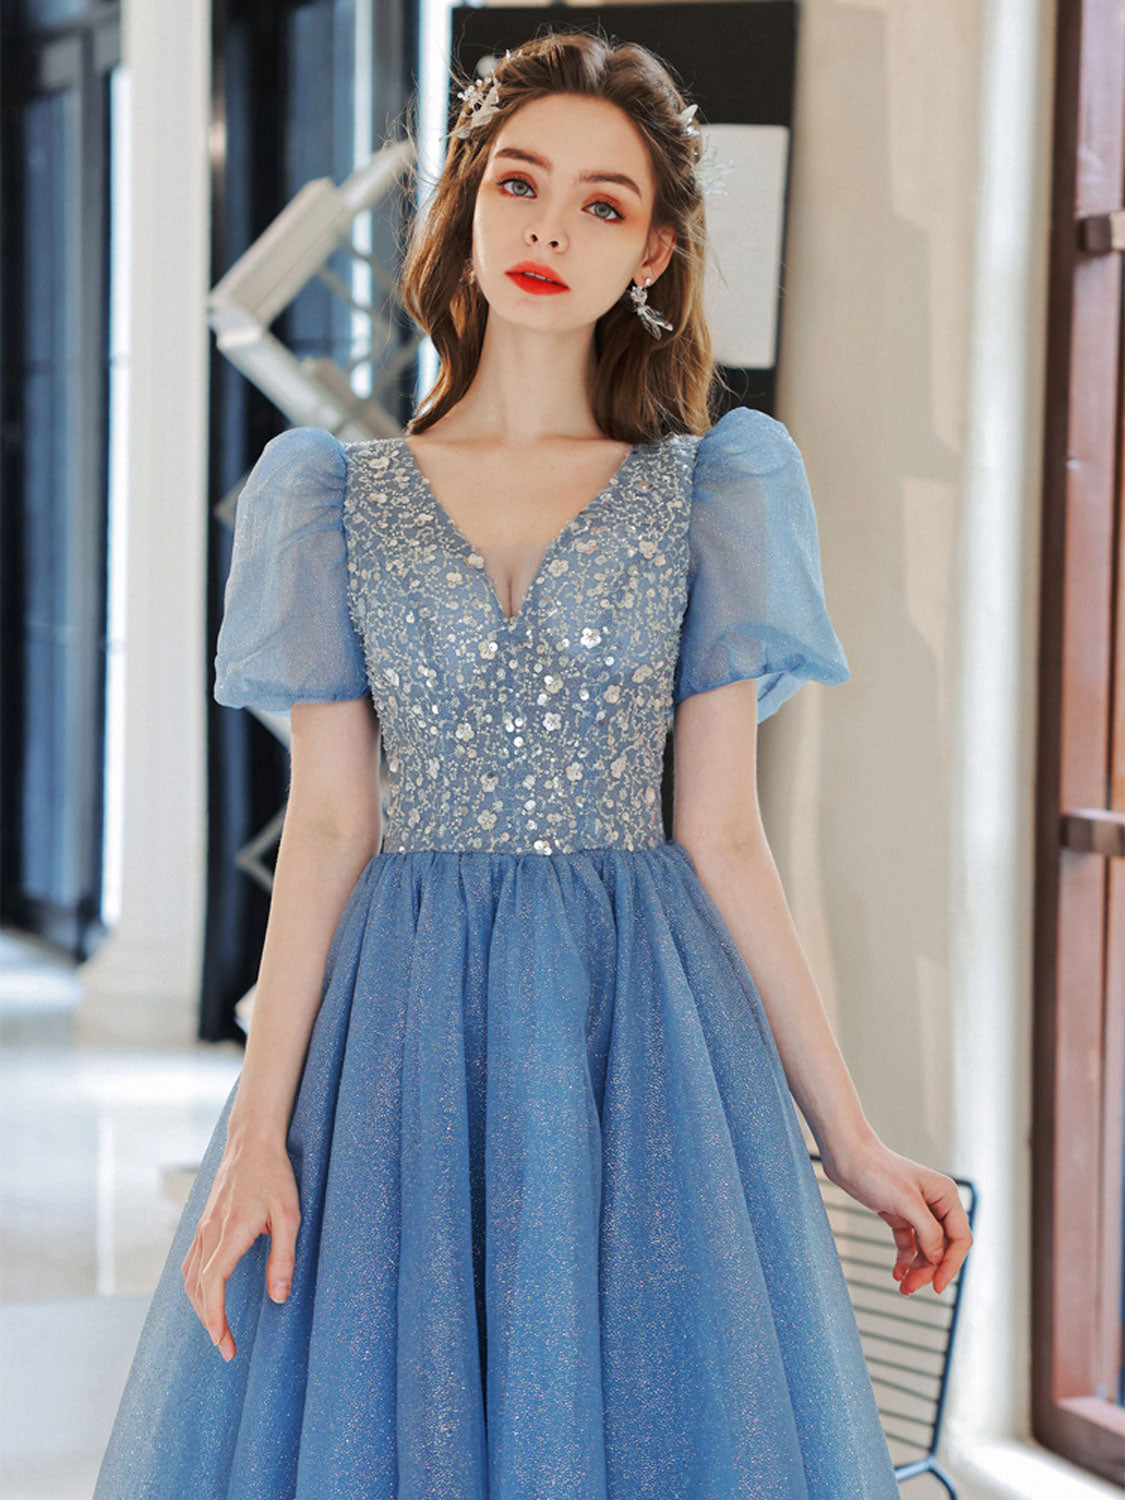  Blue Formal Evening Dress